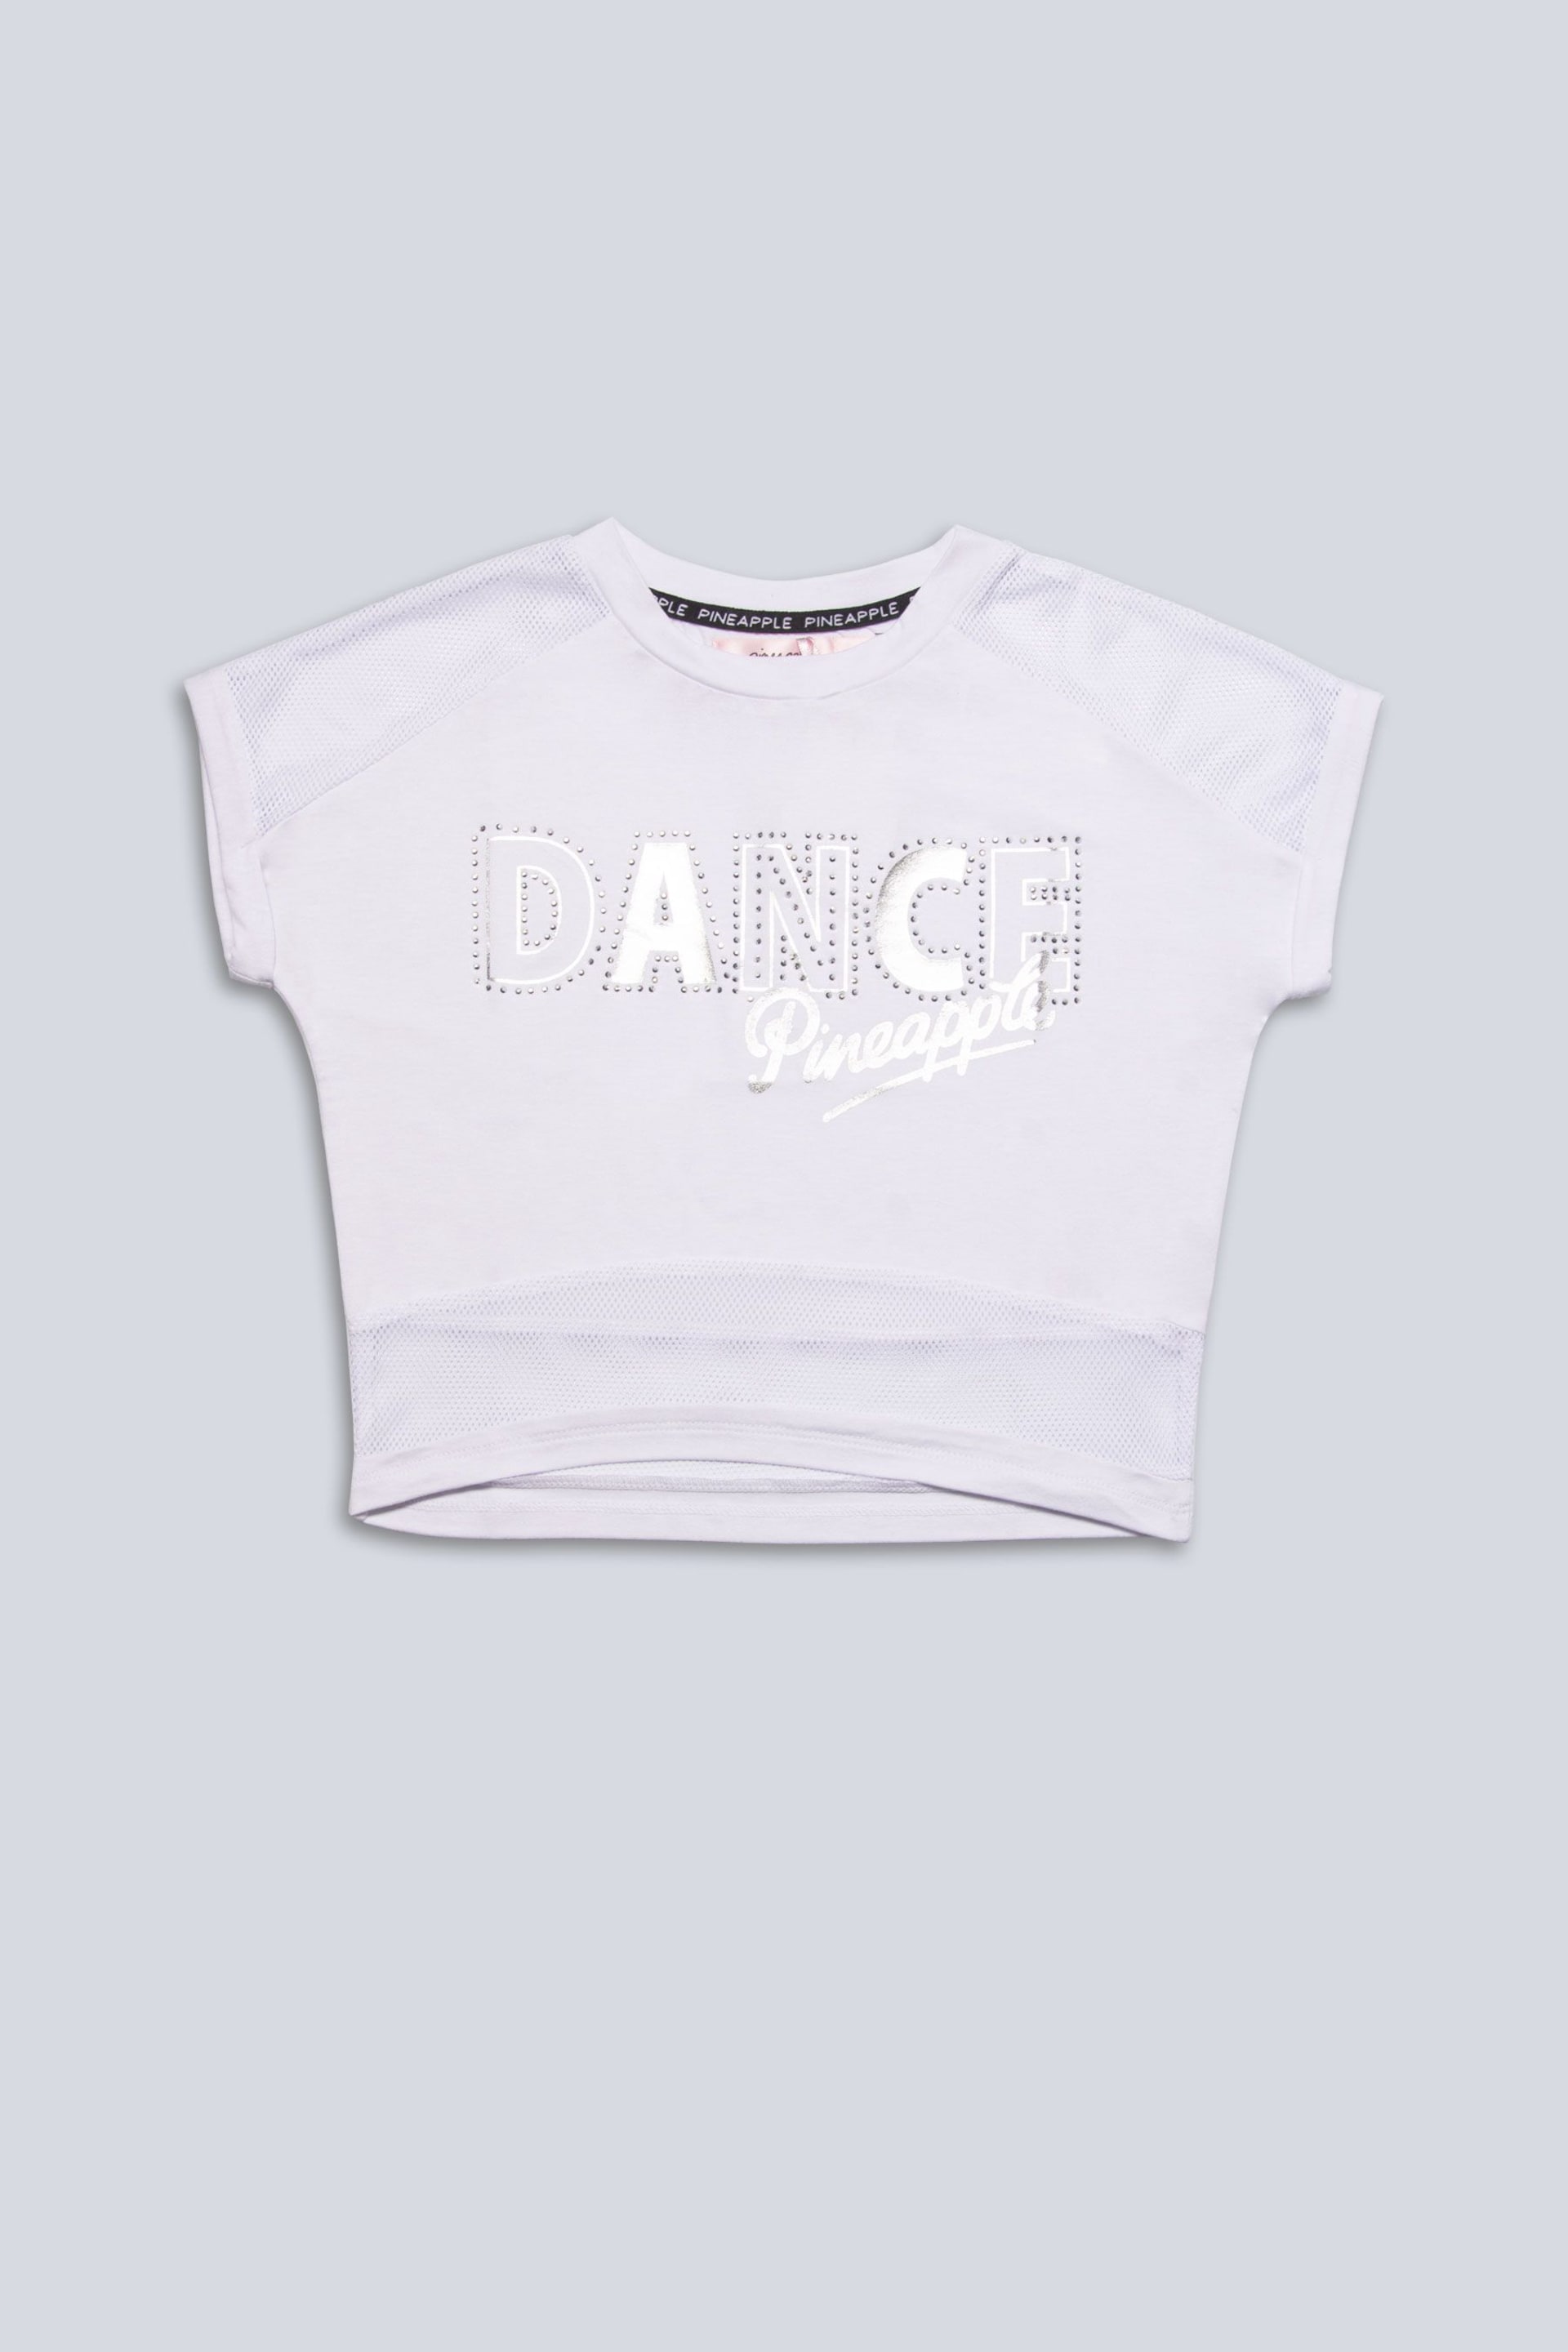 Pineapple White Dance Girls Crop T-Shirt - Image 6 of 6